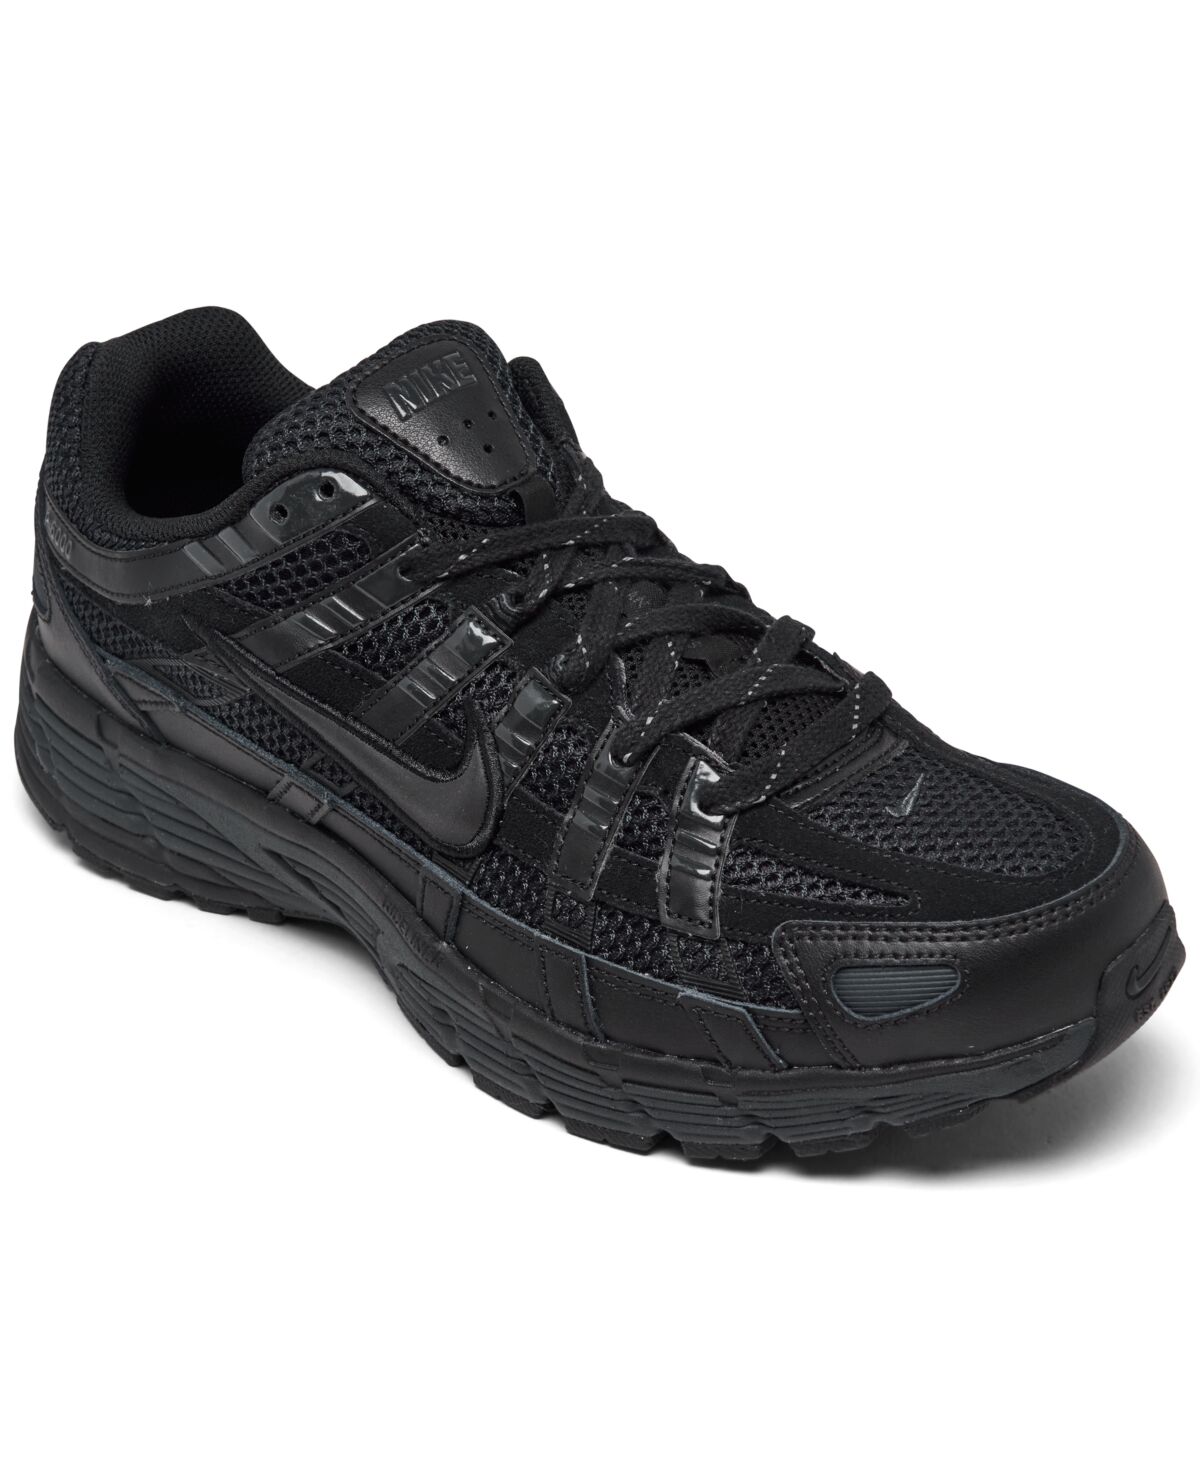 Nike Men's P-6000 Premium Casual Sneakers from Finish Line - Black